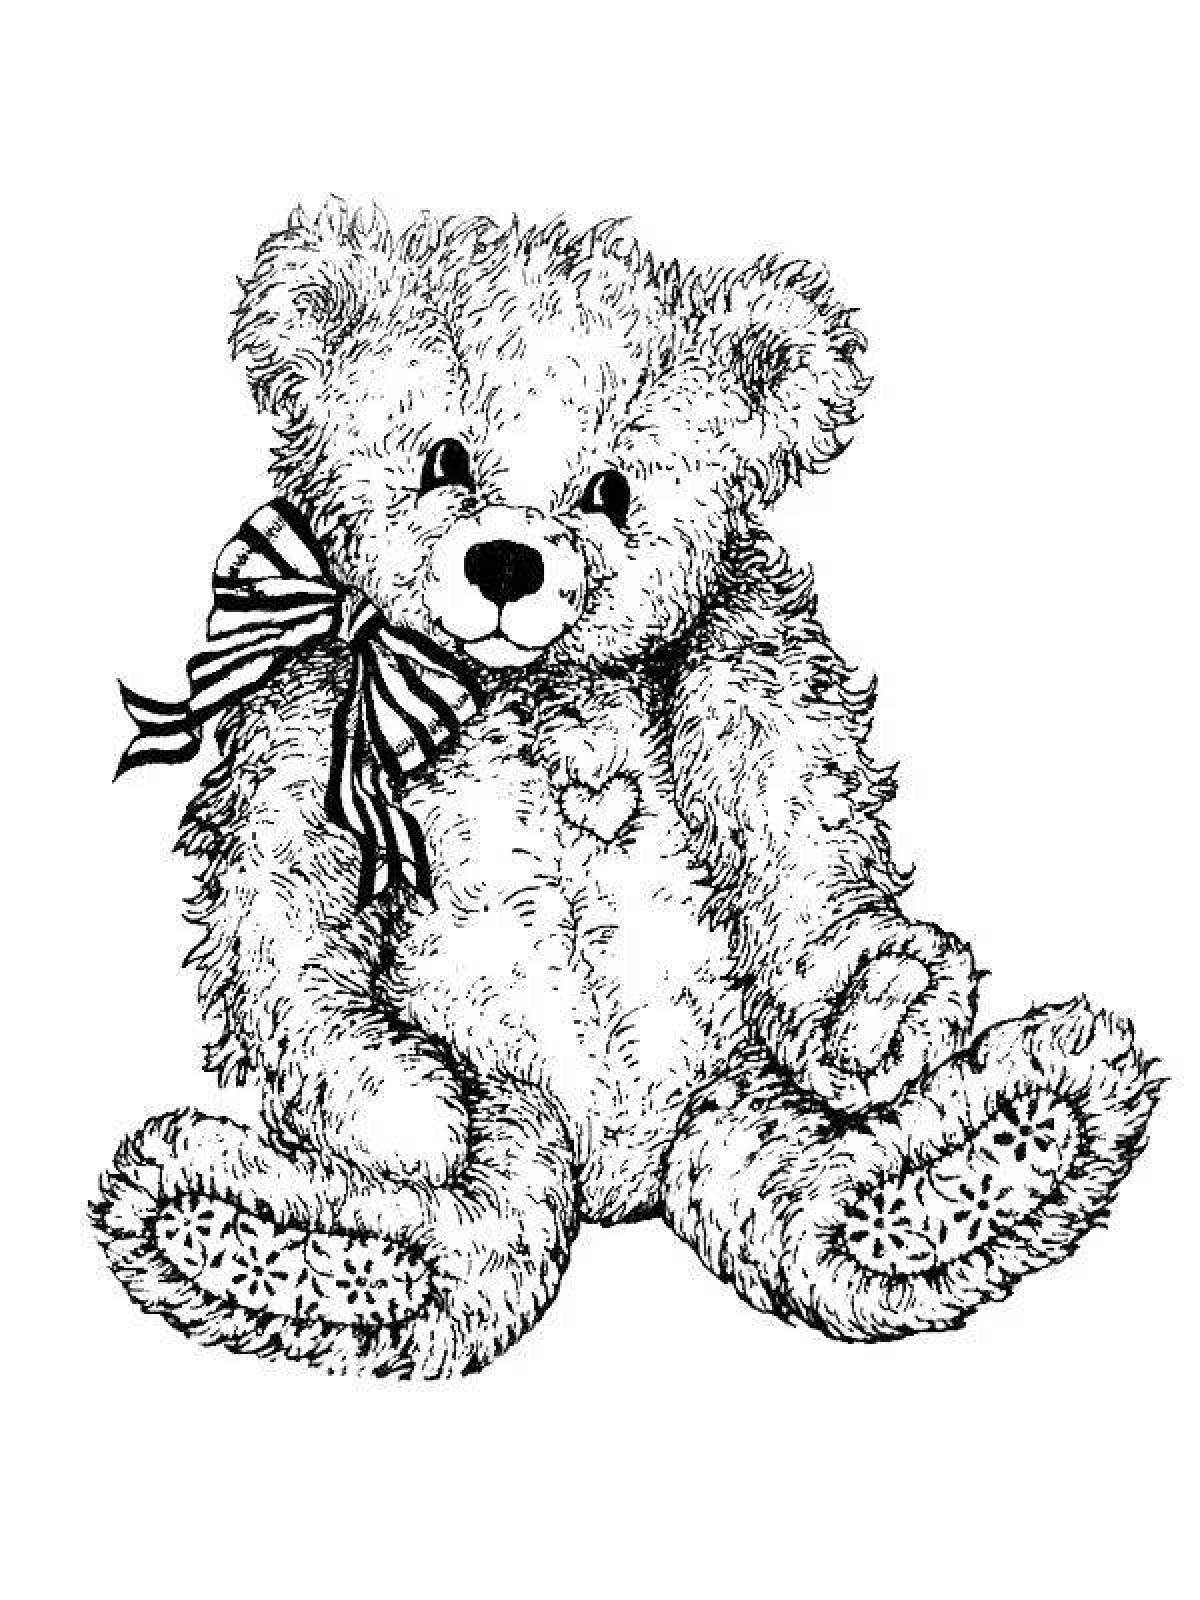 Coloring book fluffy teddy bear